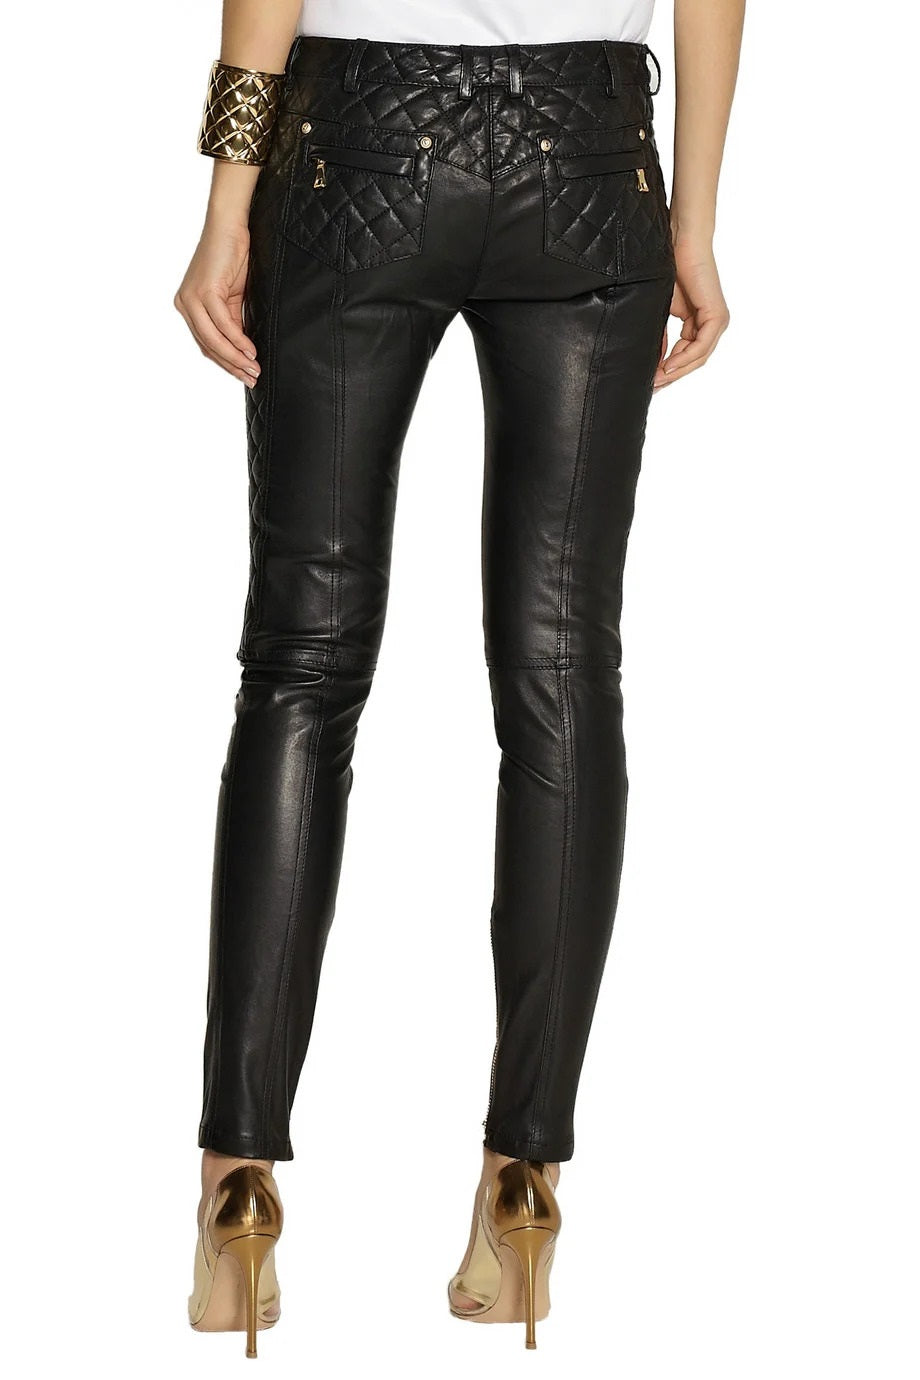 Women Genuine Leather Pant WP 02 SkinOutfit